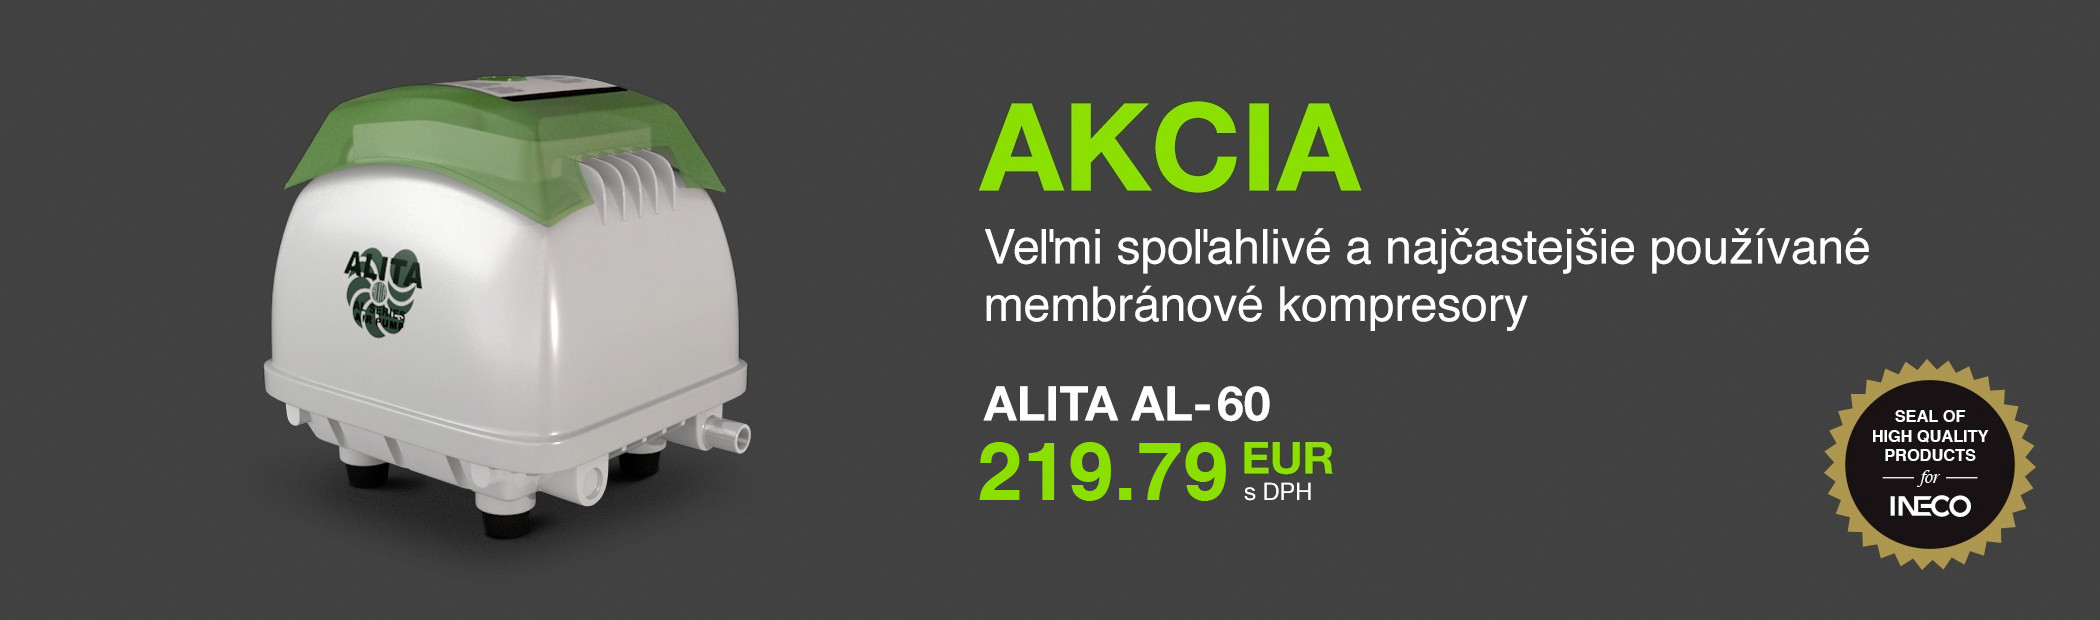 Alita_akcia